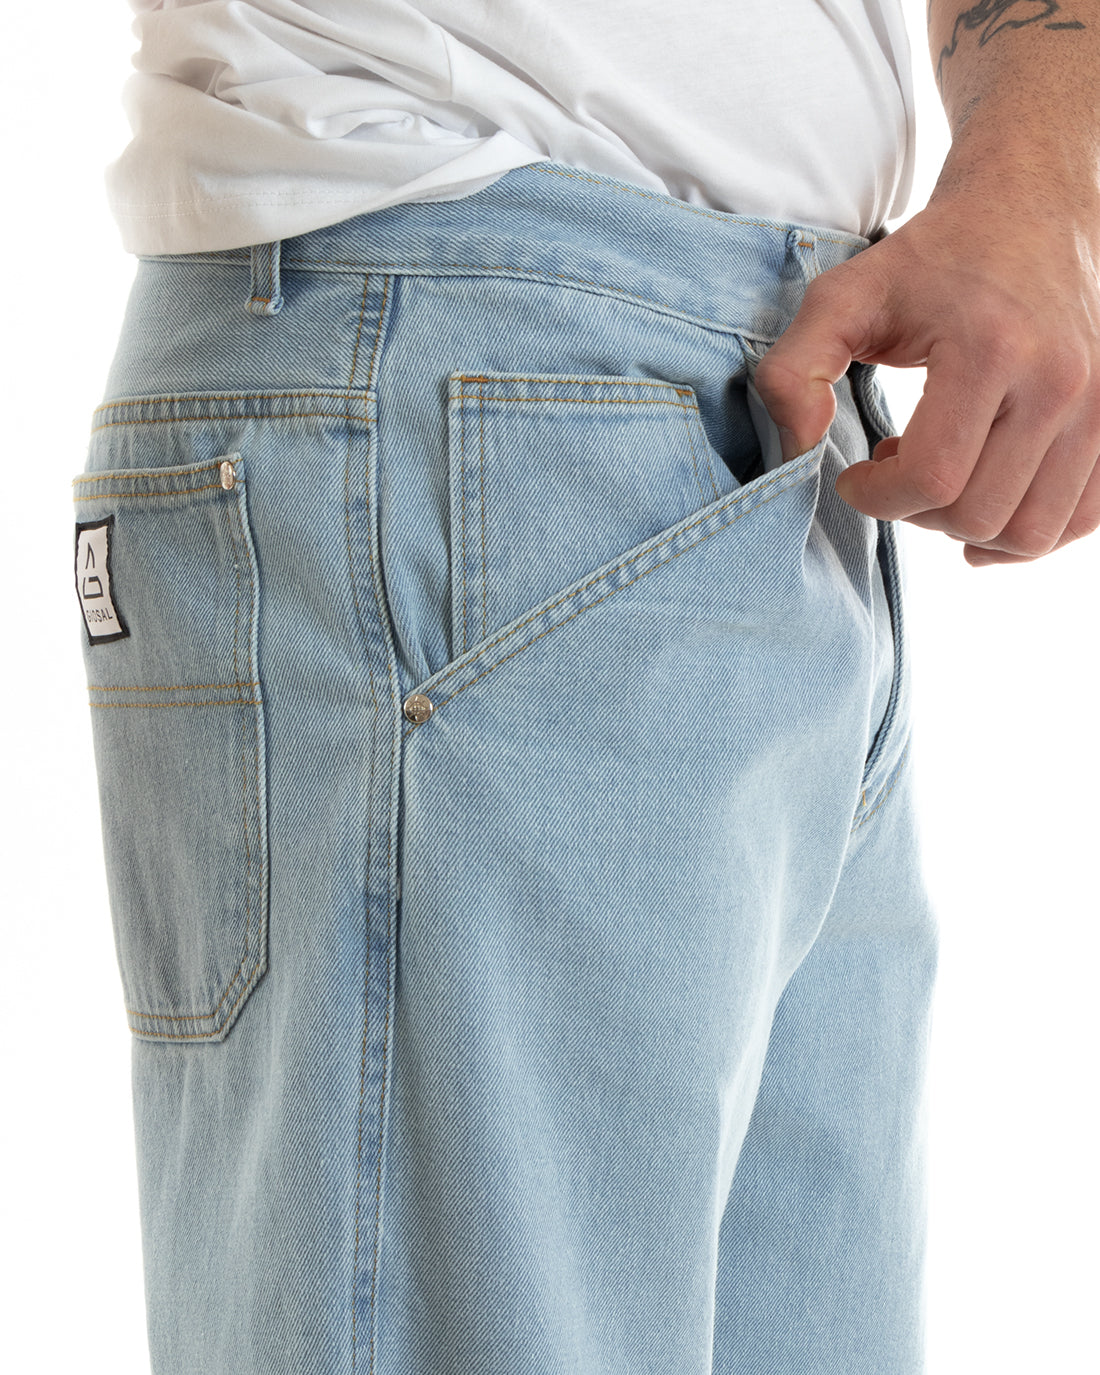 Pantaloni Jeans Uomo Unisex Baggy Denim Chiaro Tasca America Casual GIOSAL-P5756A